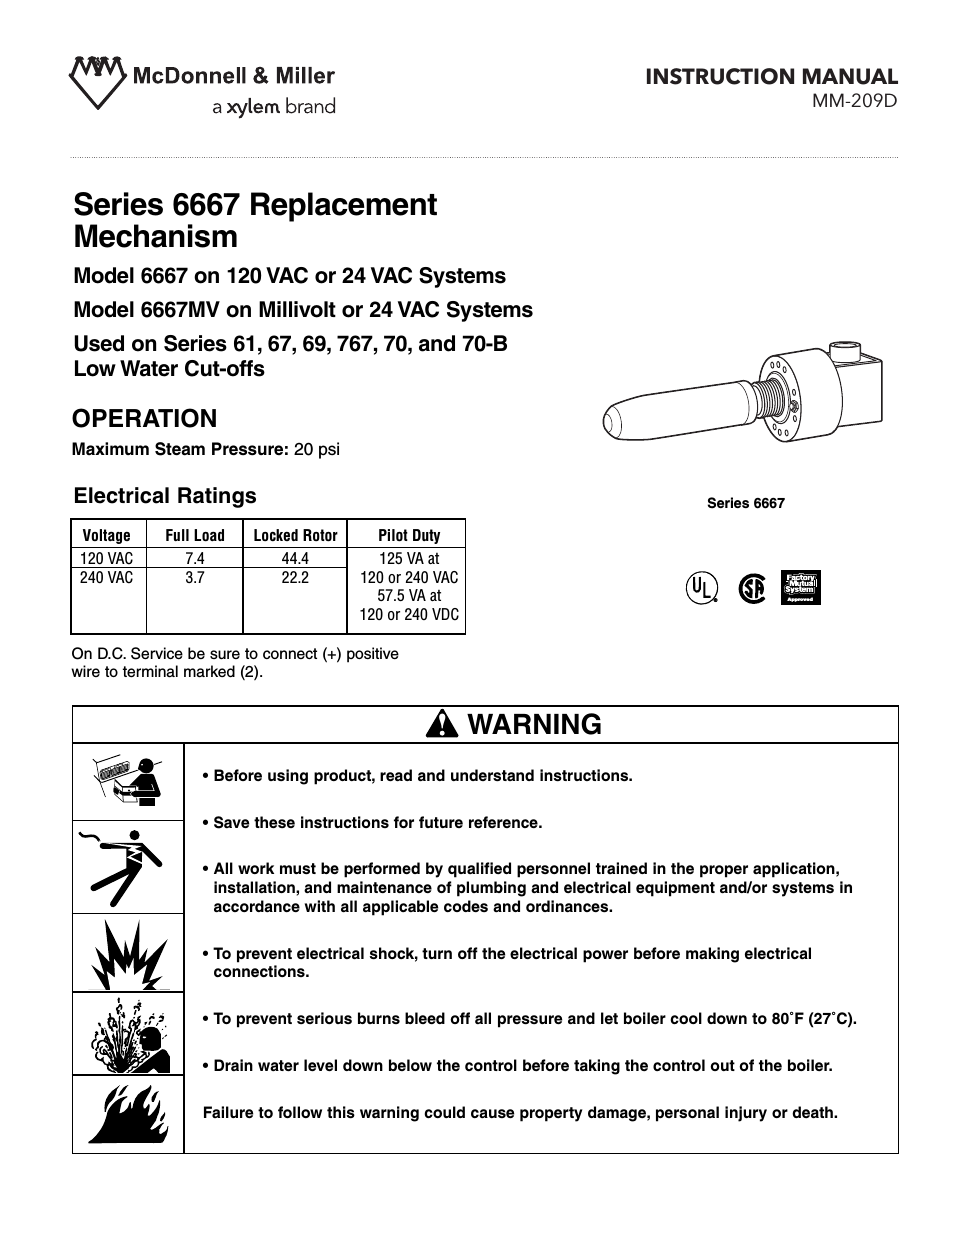 MM 209D Series 6667 Replacement Mechanism